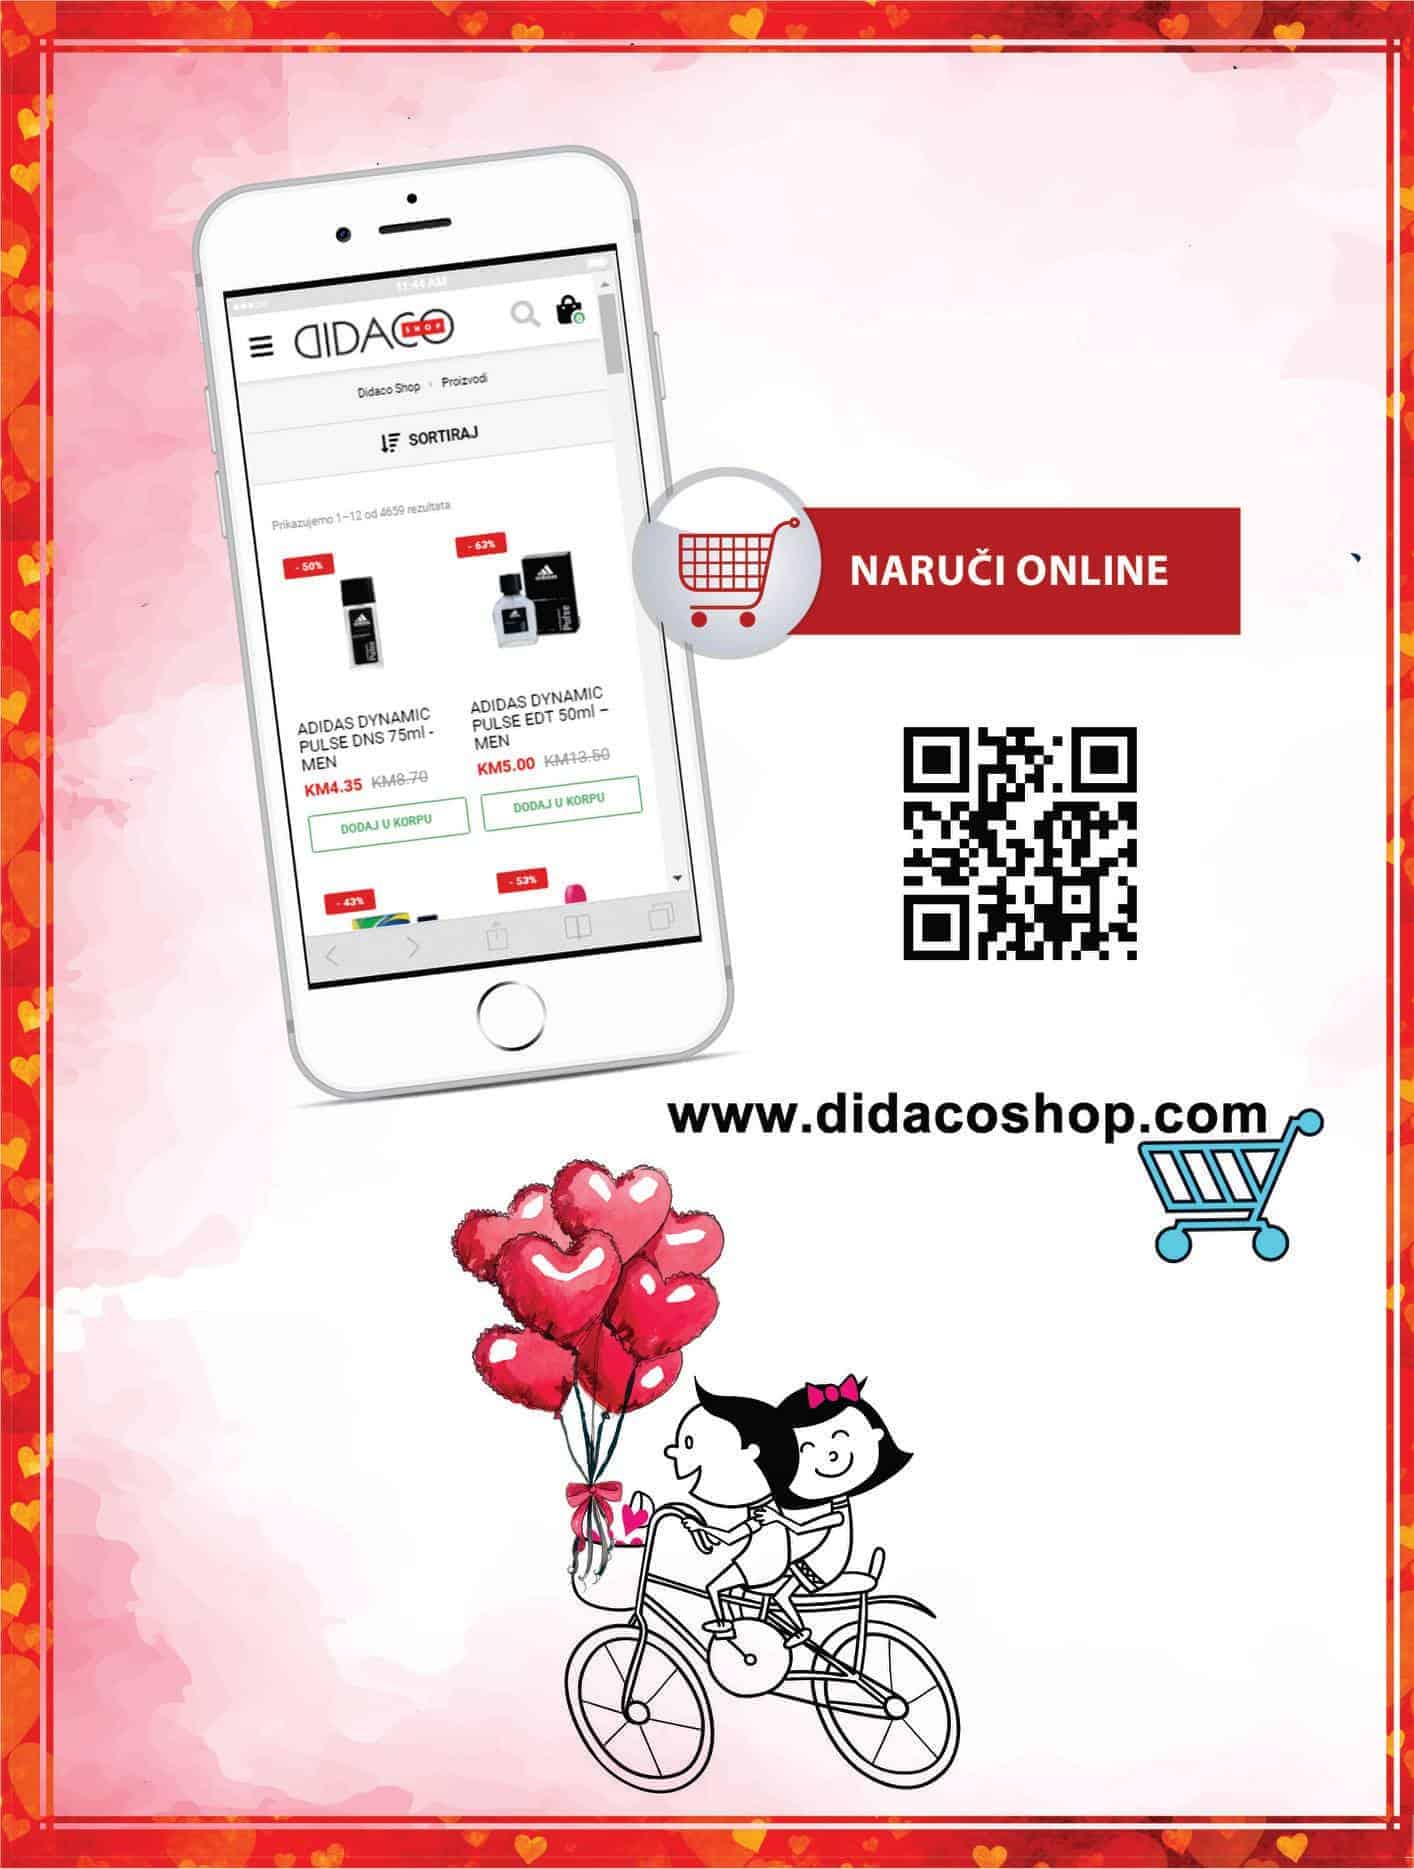 Didaco online shop  Didaco sarajevo lokacije  Didaco radno vrijeme  Didaco banja luka  Didaco shop mostar  Didaco tuzla  Didaco web shop  Cm katalog